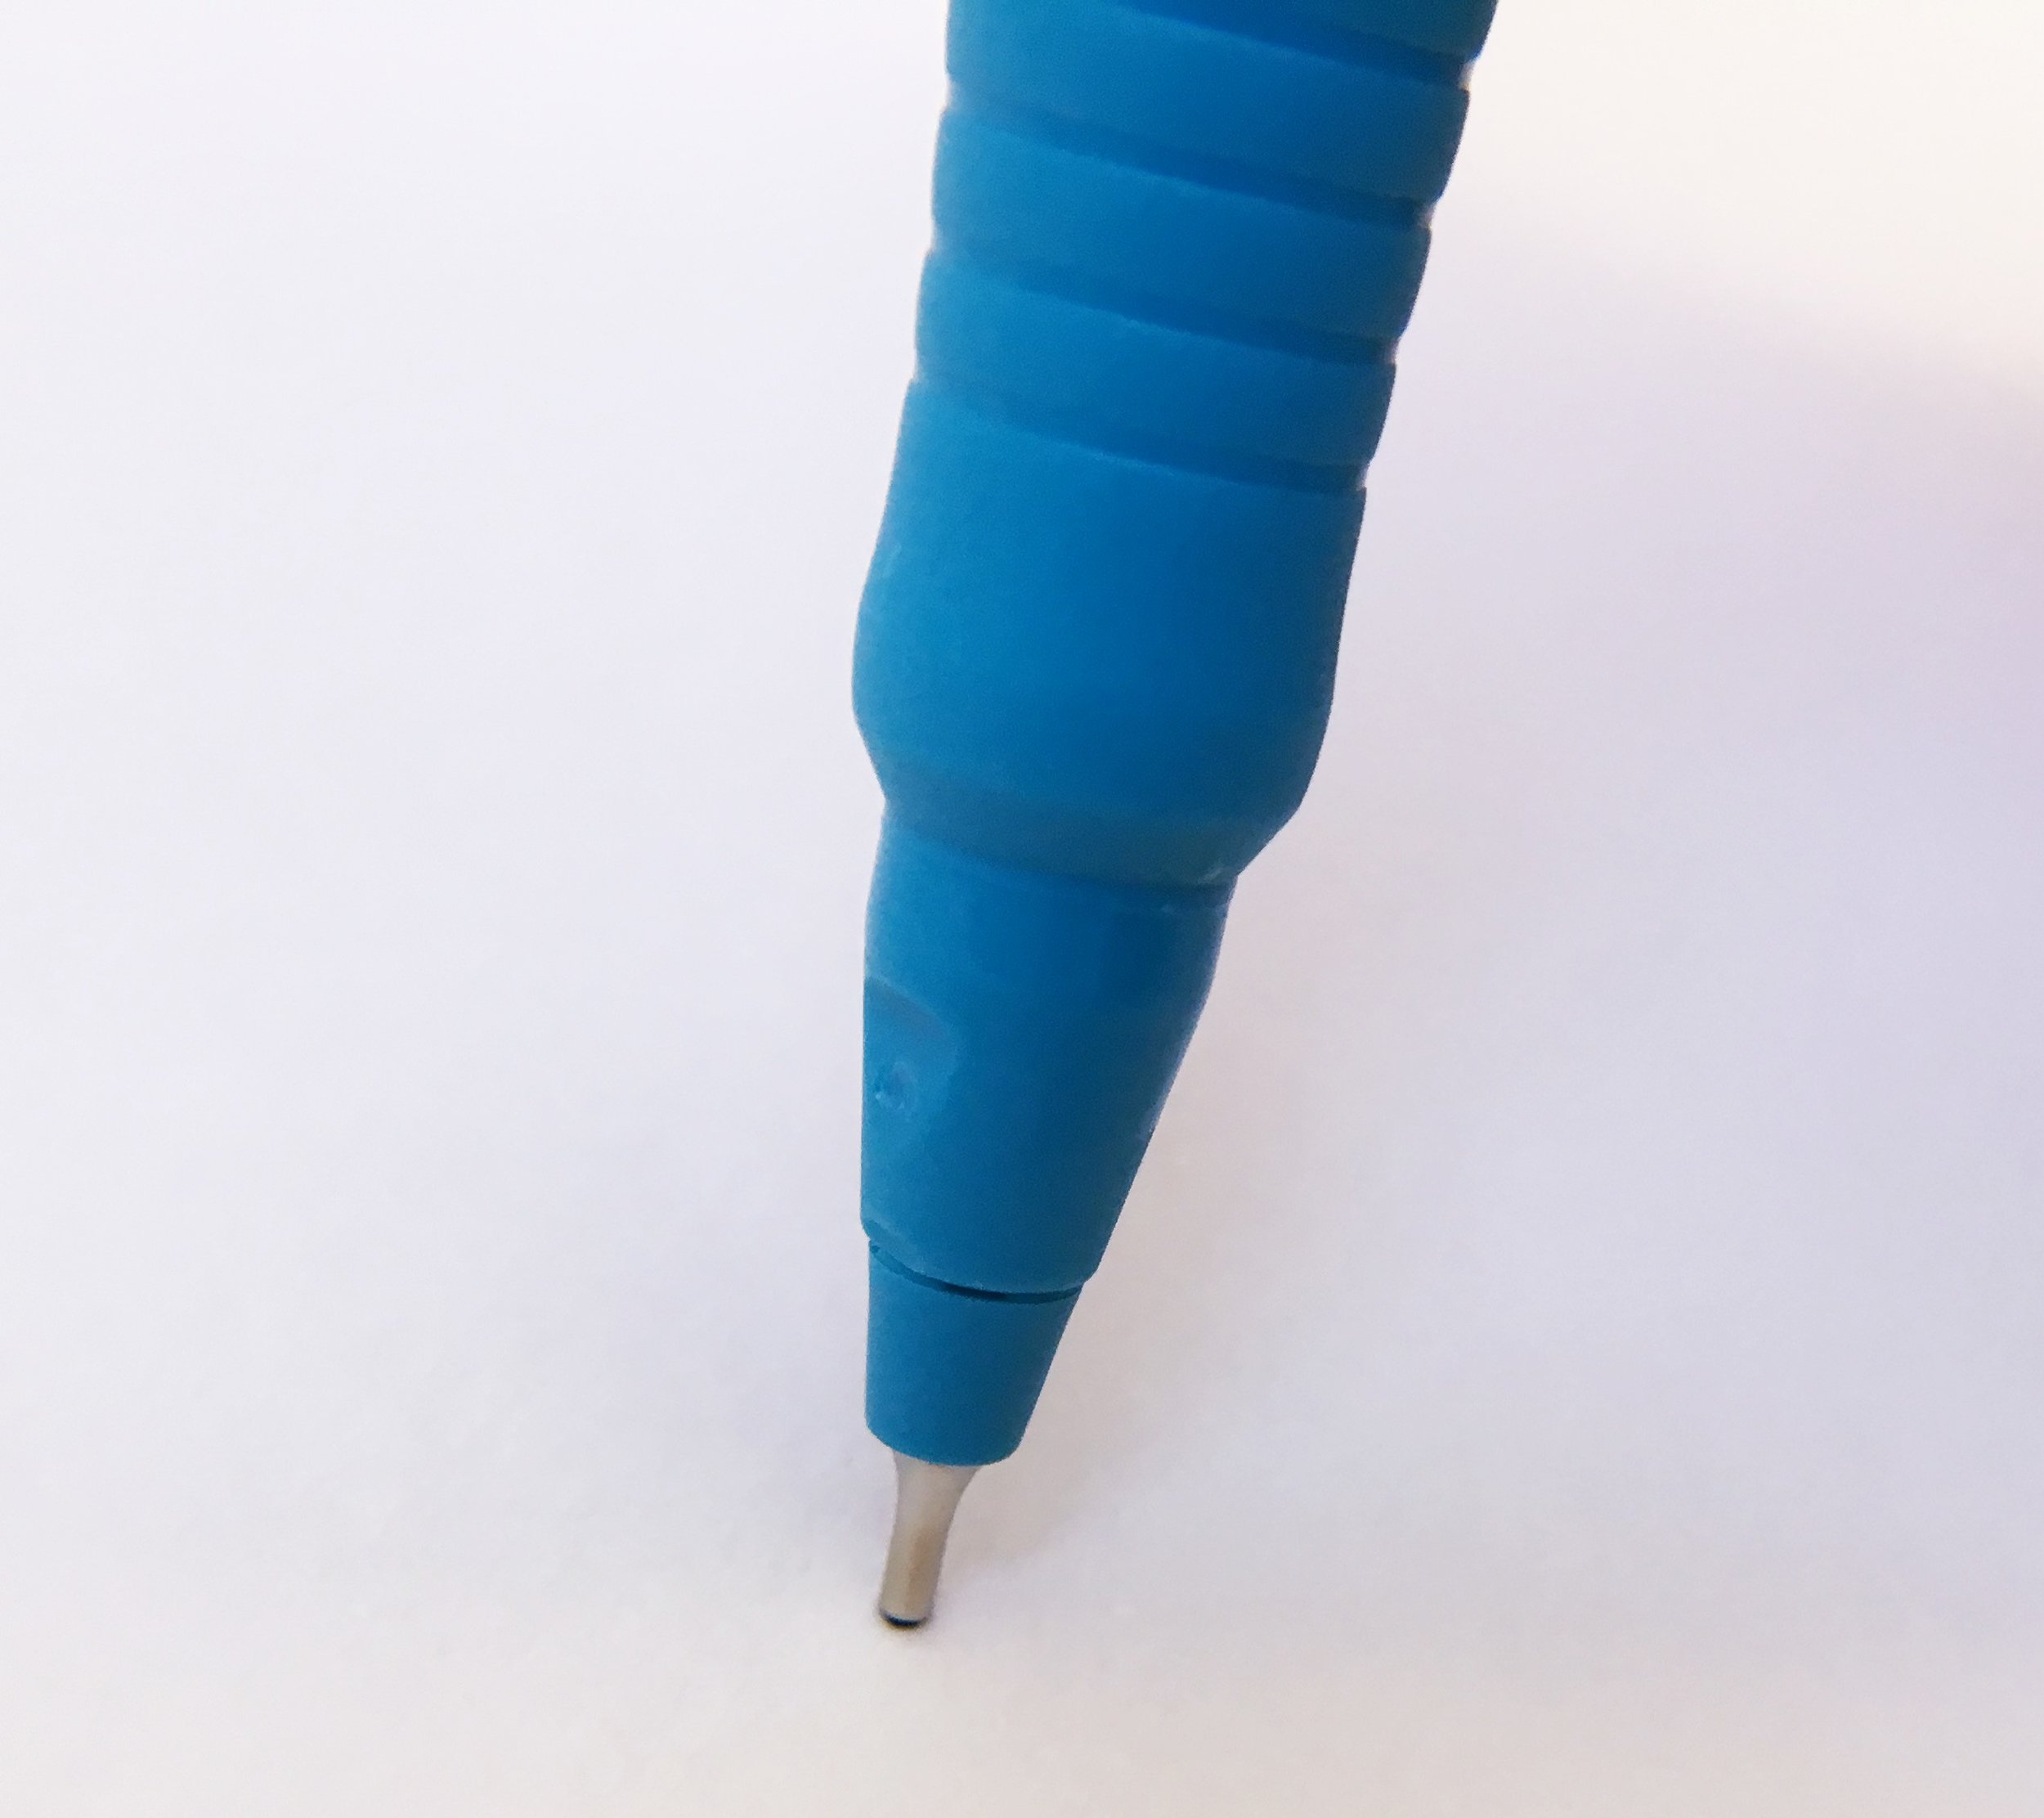 Stabilo Sensor Fineliner Marker Pen Review — The Pen Addict